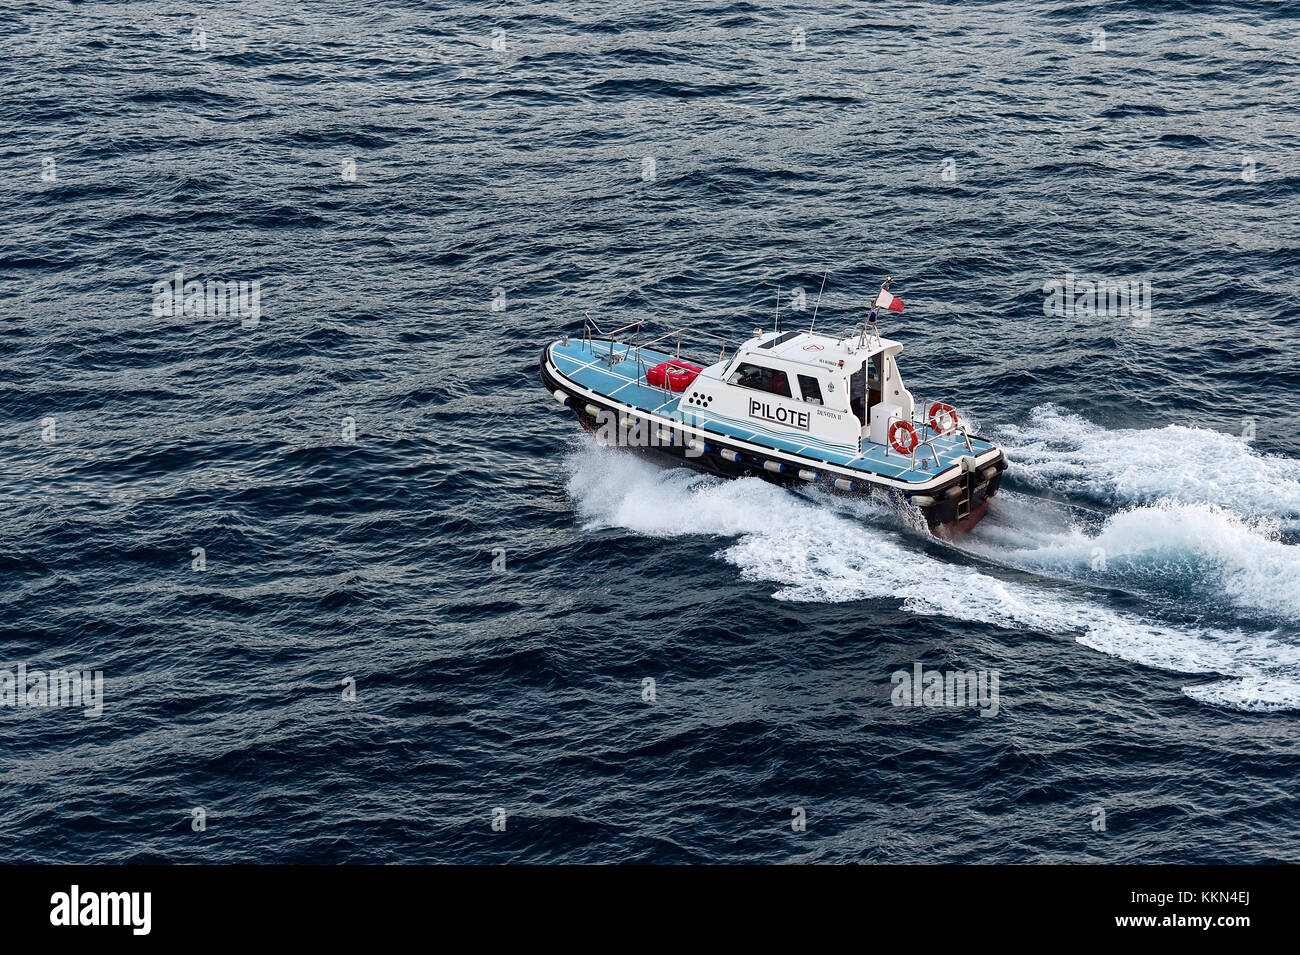 Devota II Pilote boat, Monaco Stock Photo